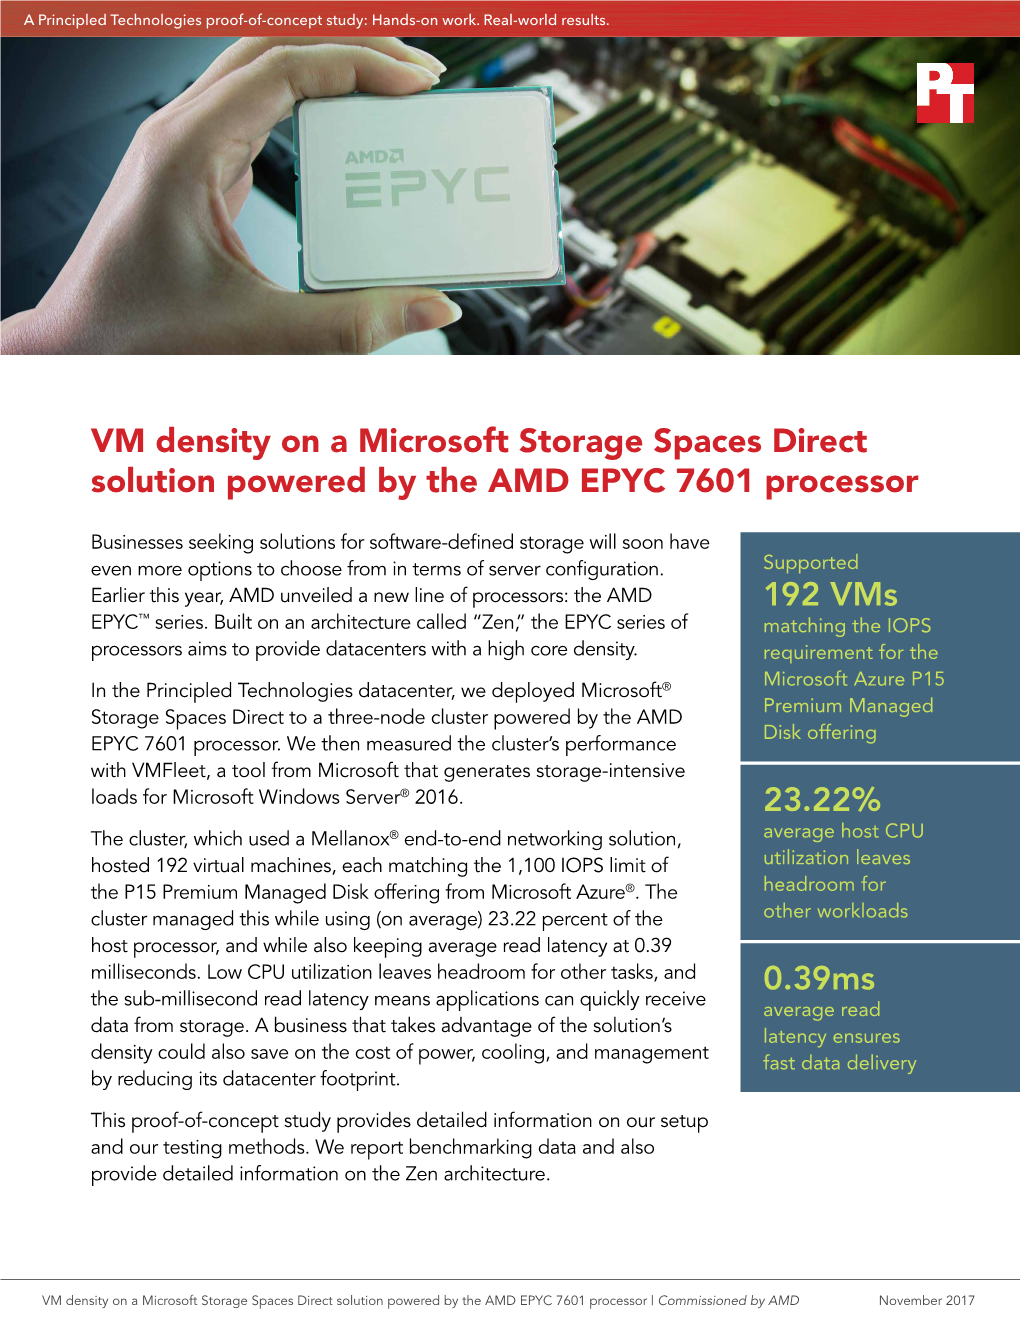 AMD EPYC Microsoft Storage Spaces Direct